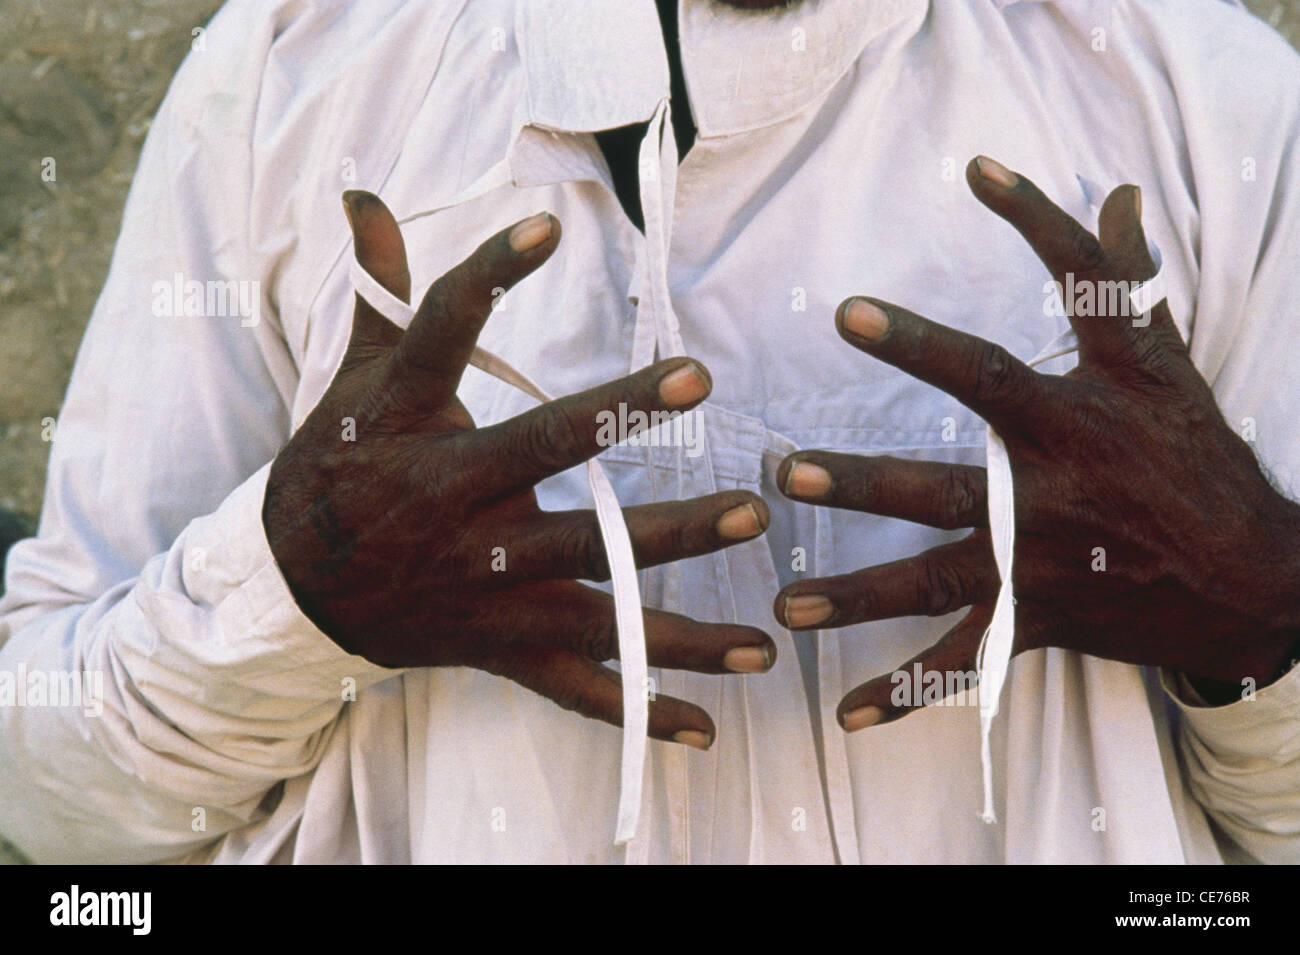 Hexadactilly ; uomo indiano con sei dita in mano ; malformazione congenita ; Polidattilo ; polidattilismo ; iperdattilismo ; India ; Asia Foto Stock